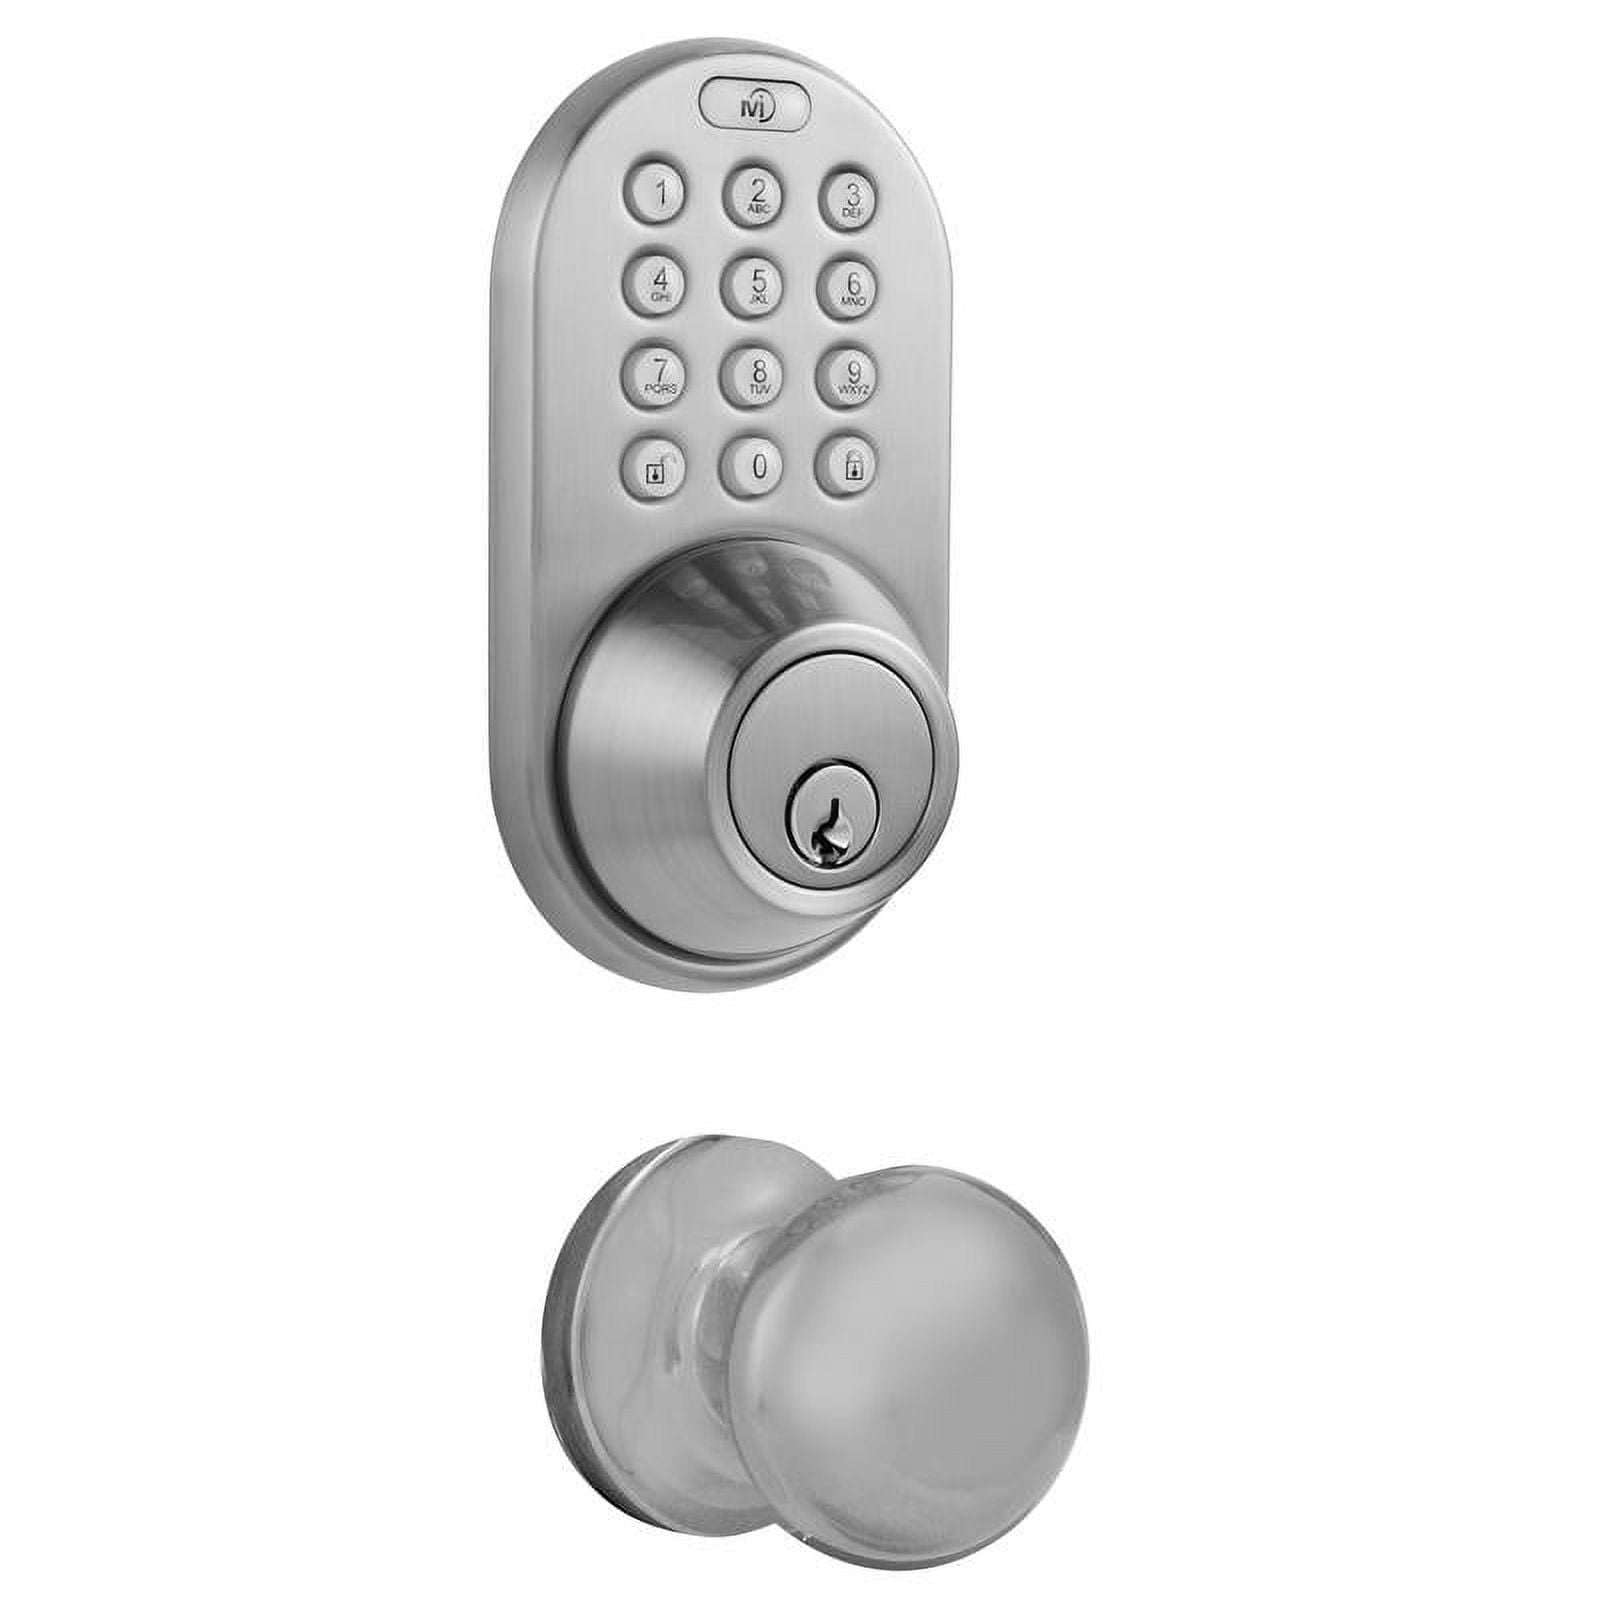 MiLocks Digital Deadbolt Door Lock and Passage Knob Combo, Satin Nickel  Finish with Keyless Entry via Remote Control and Keypad Code for Exterior  Doors (XFK-02SN)